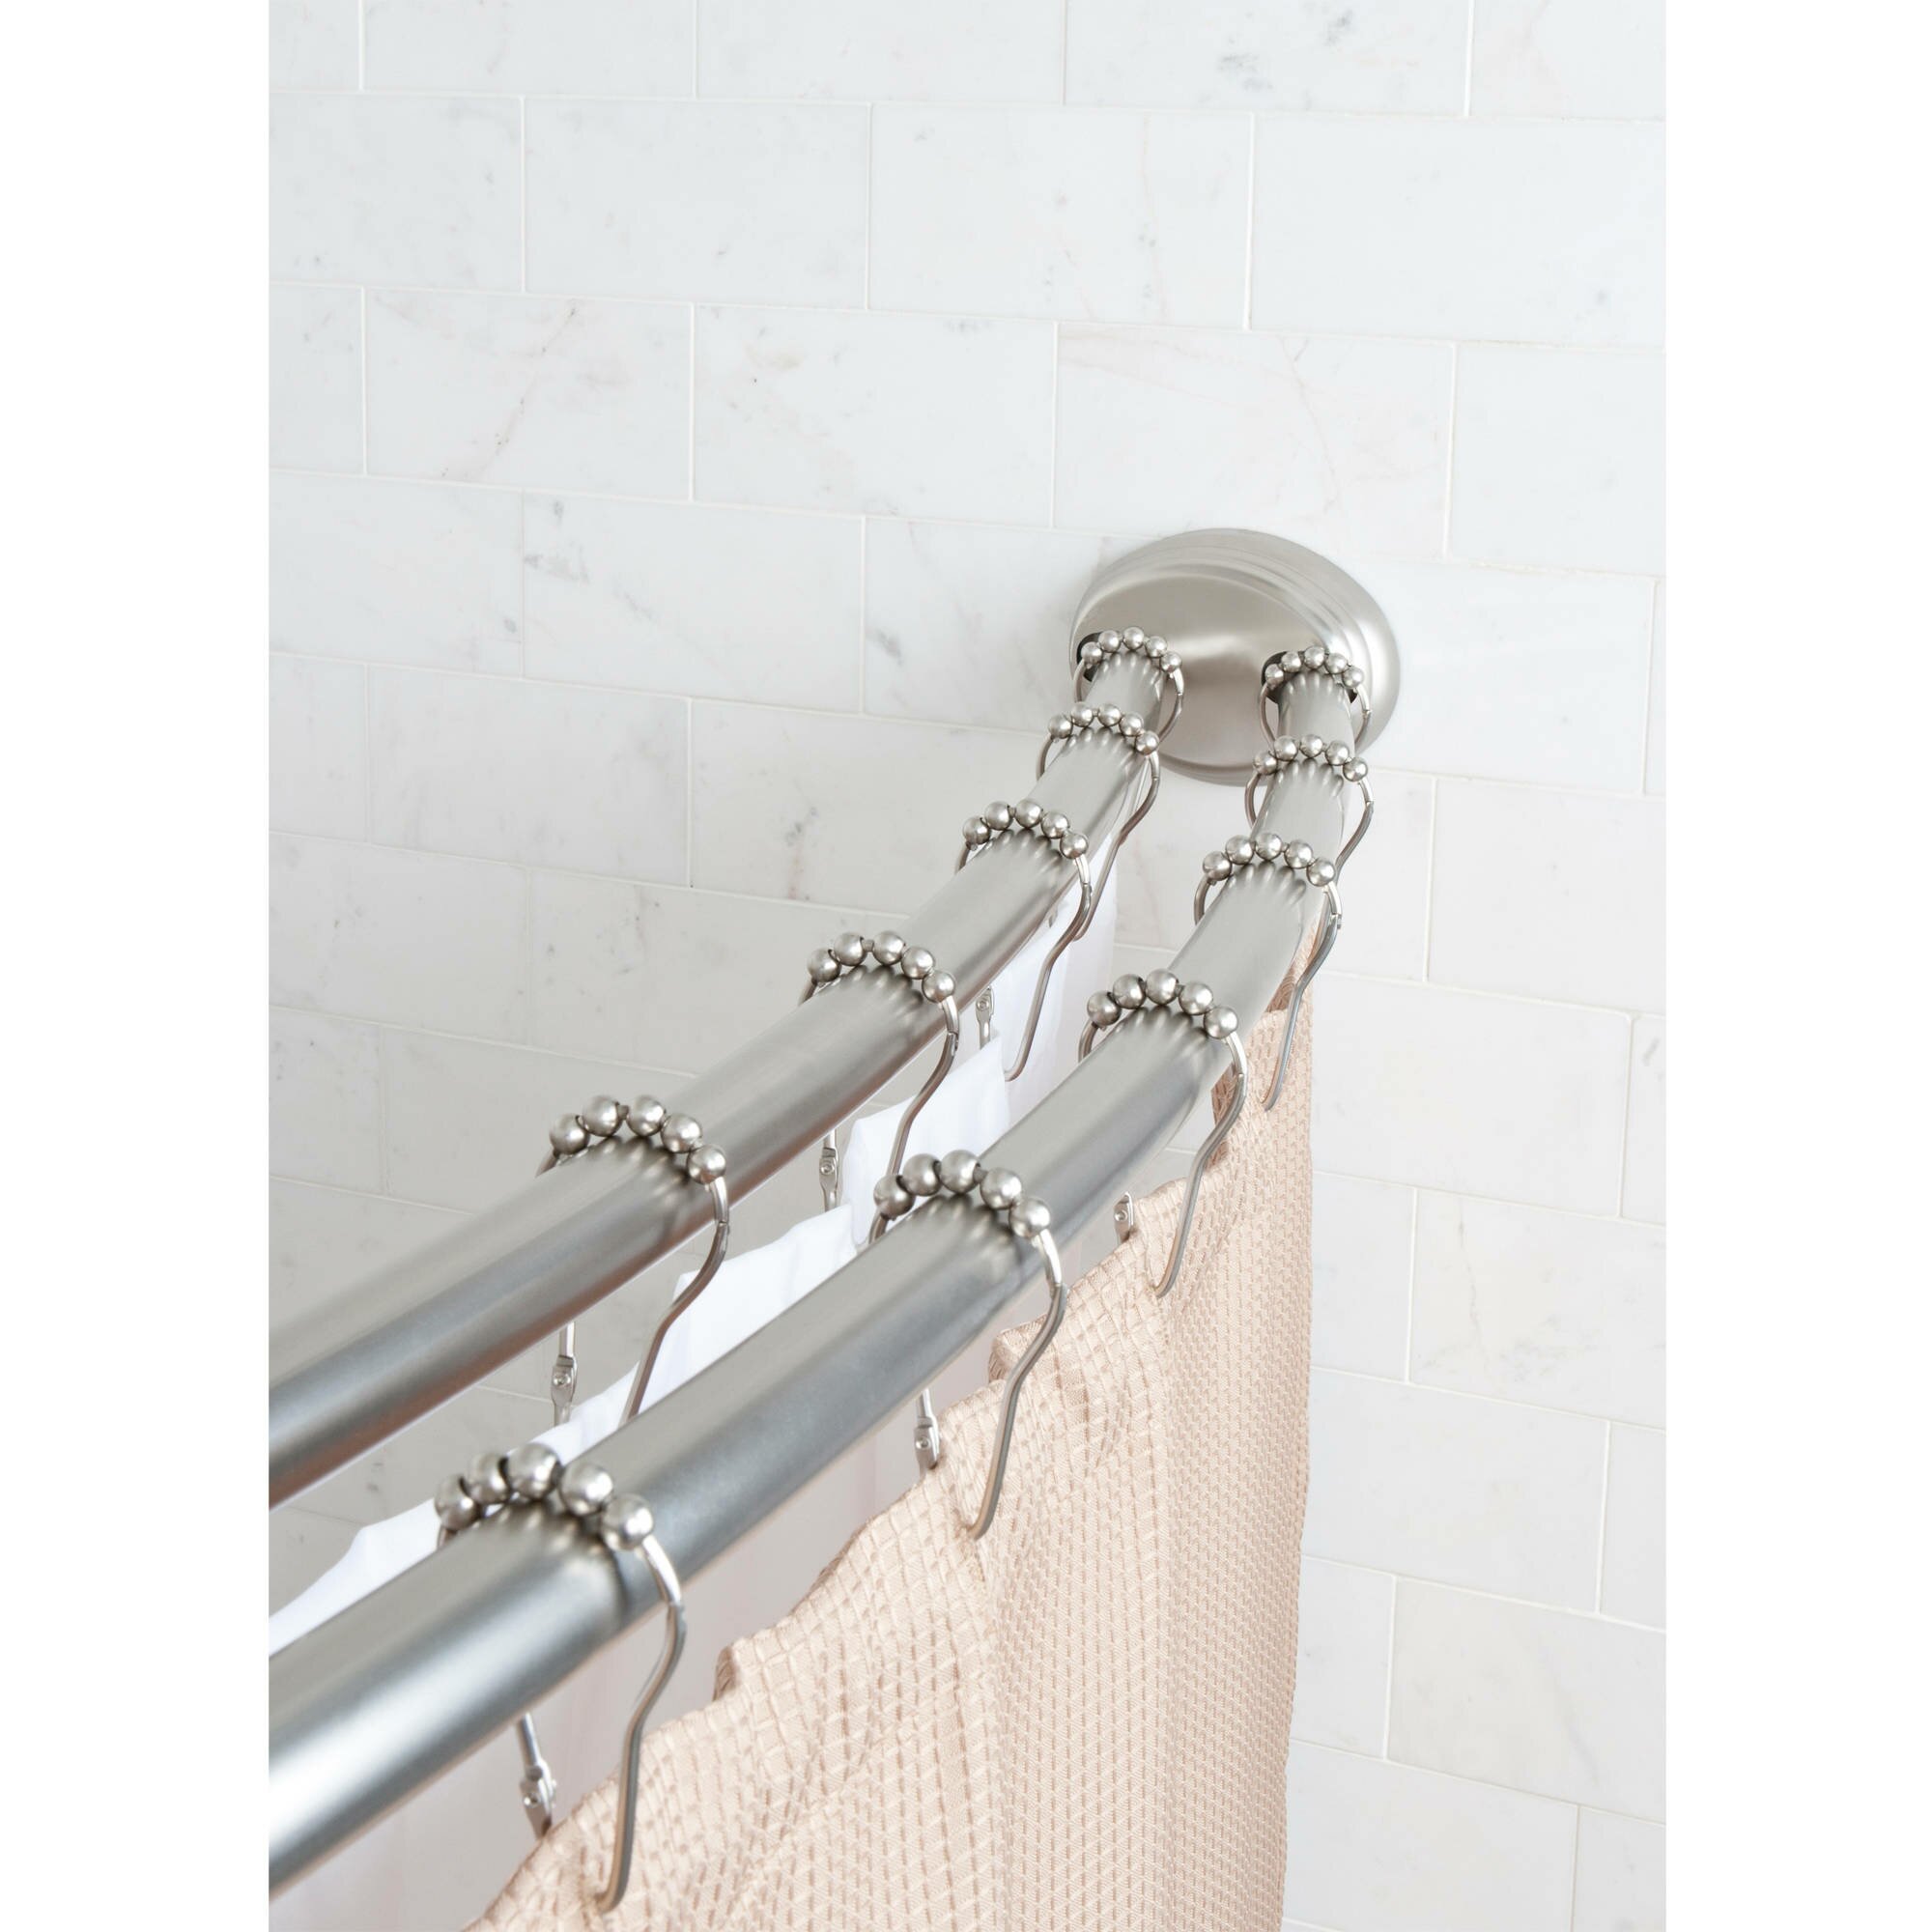 Bathroom Curtain Rods | Tension Shower Curtain Rod | Shower Curtain Tension Rod